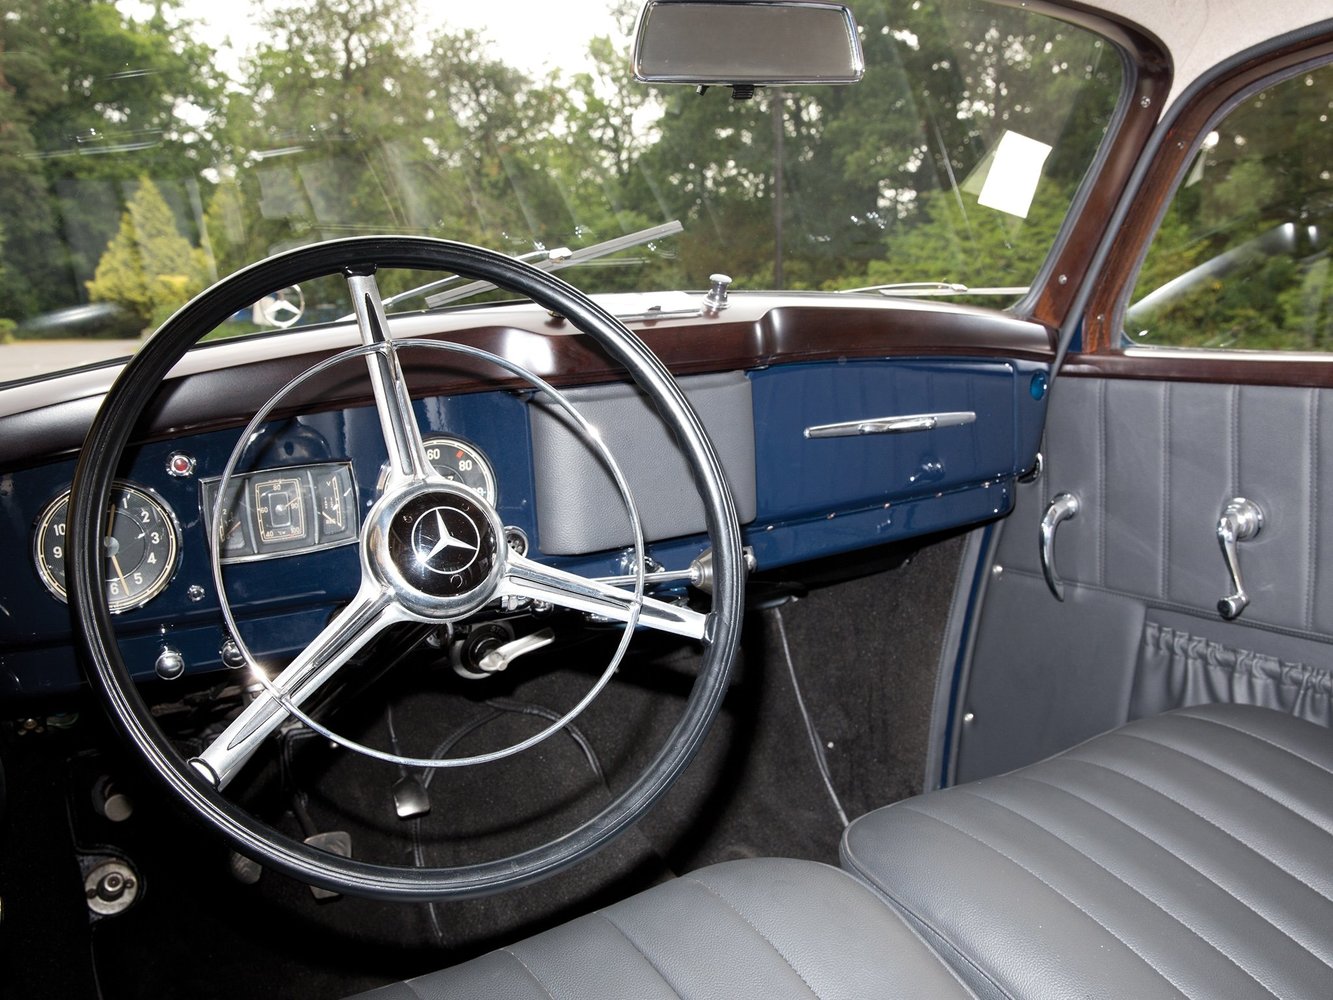 седан Mercedes-Benz W136 1947 - 1955г выпуска модификация 1.8 MT (40 л.с.)